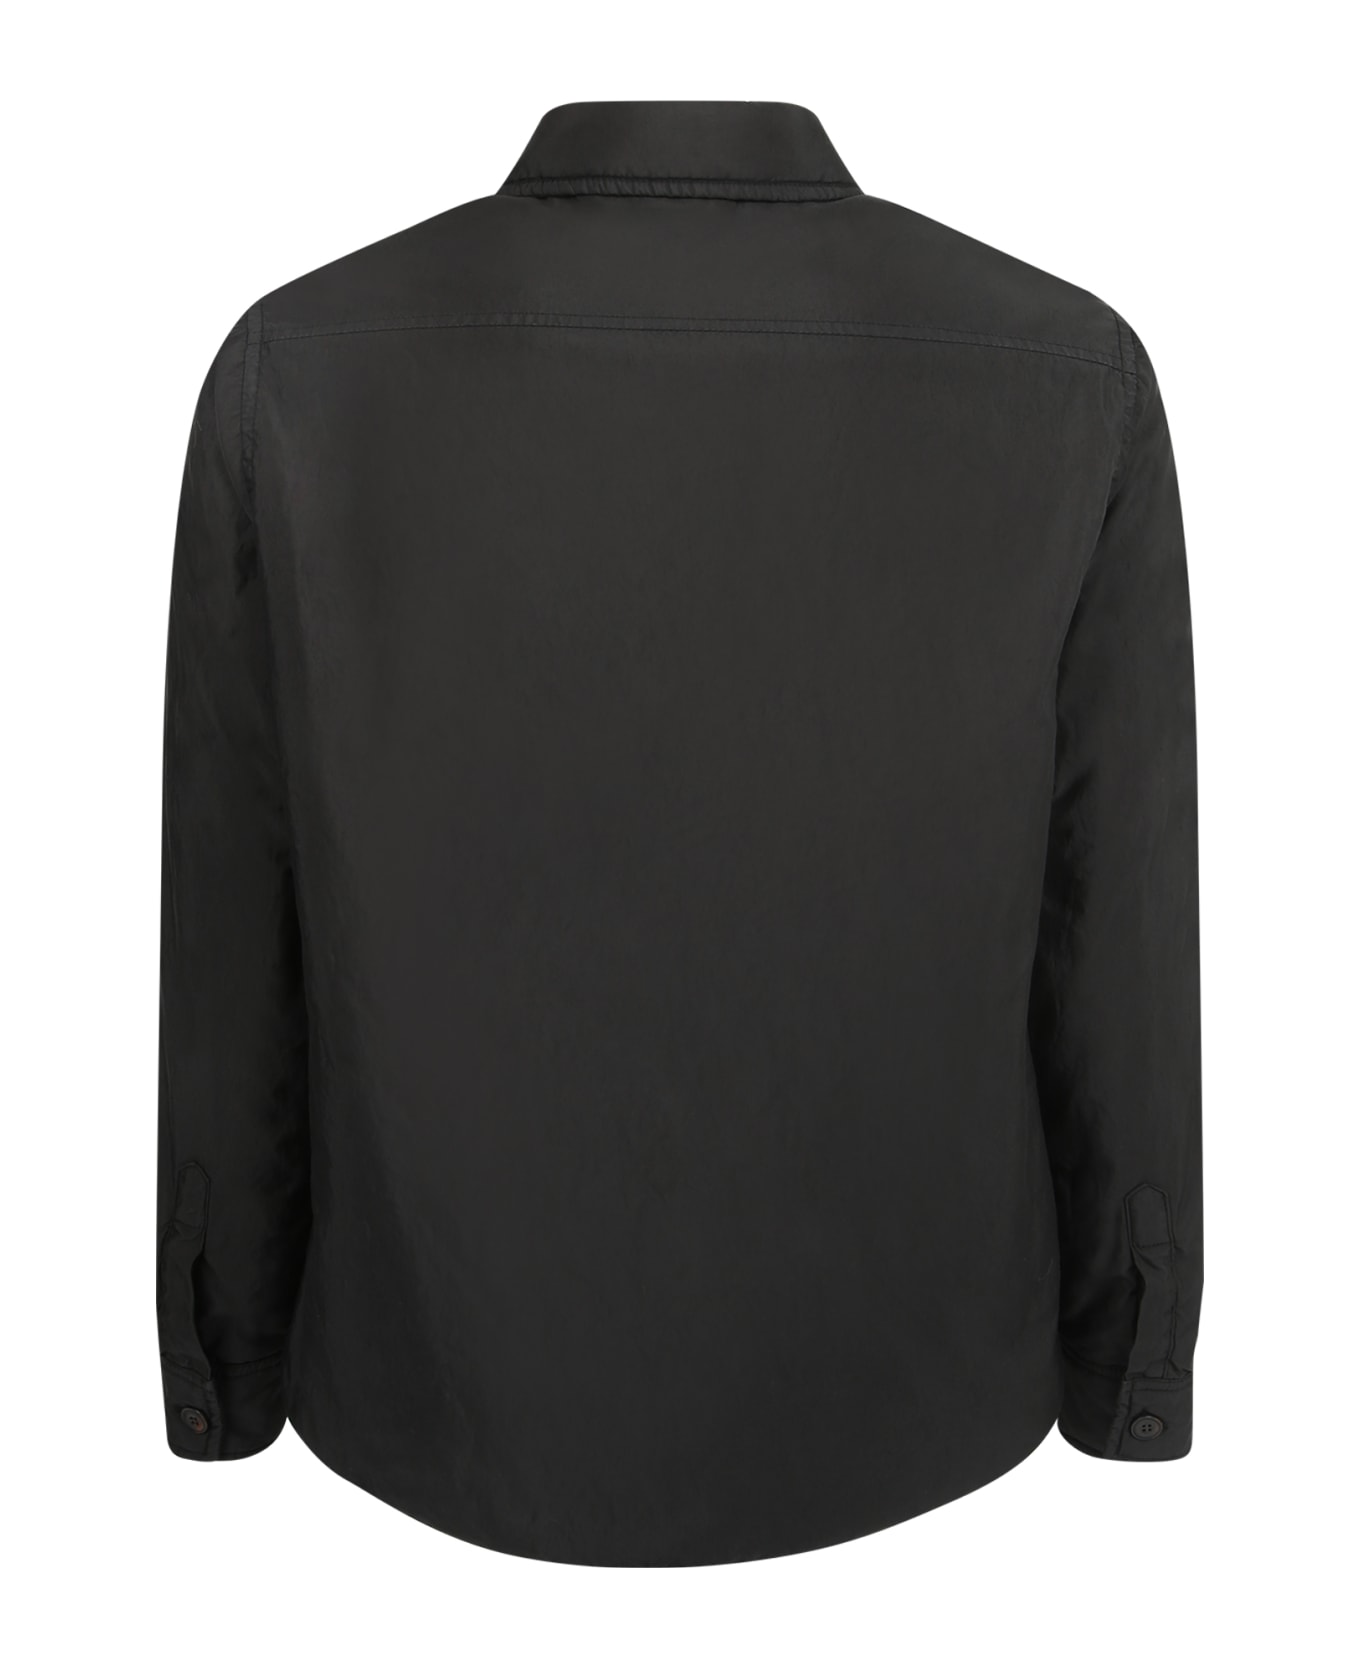 Original Vintage Style Shirt Jacket - Black